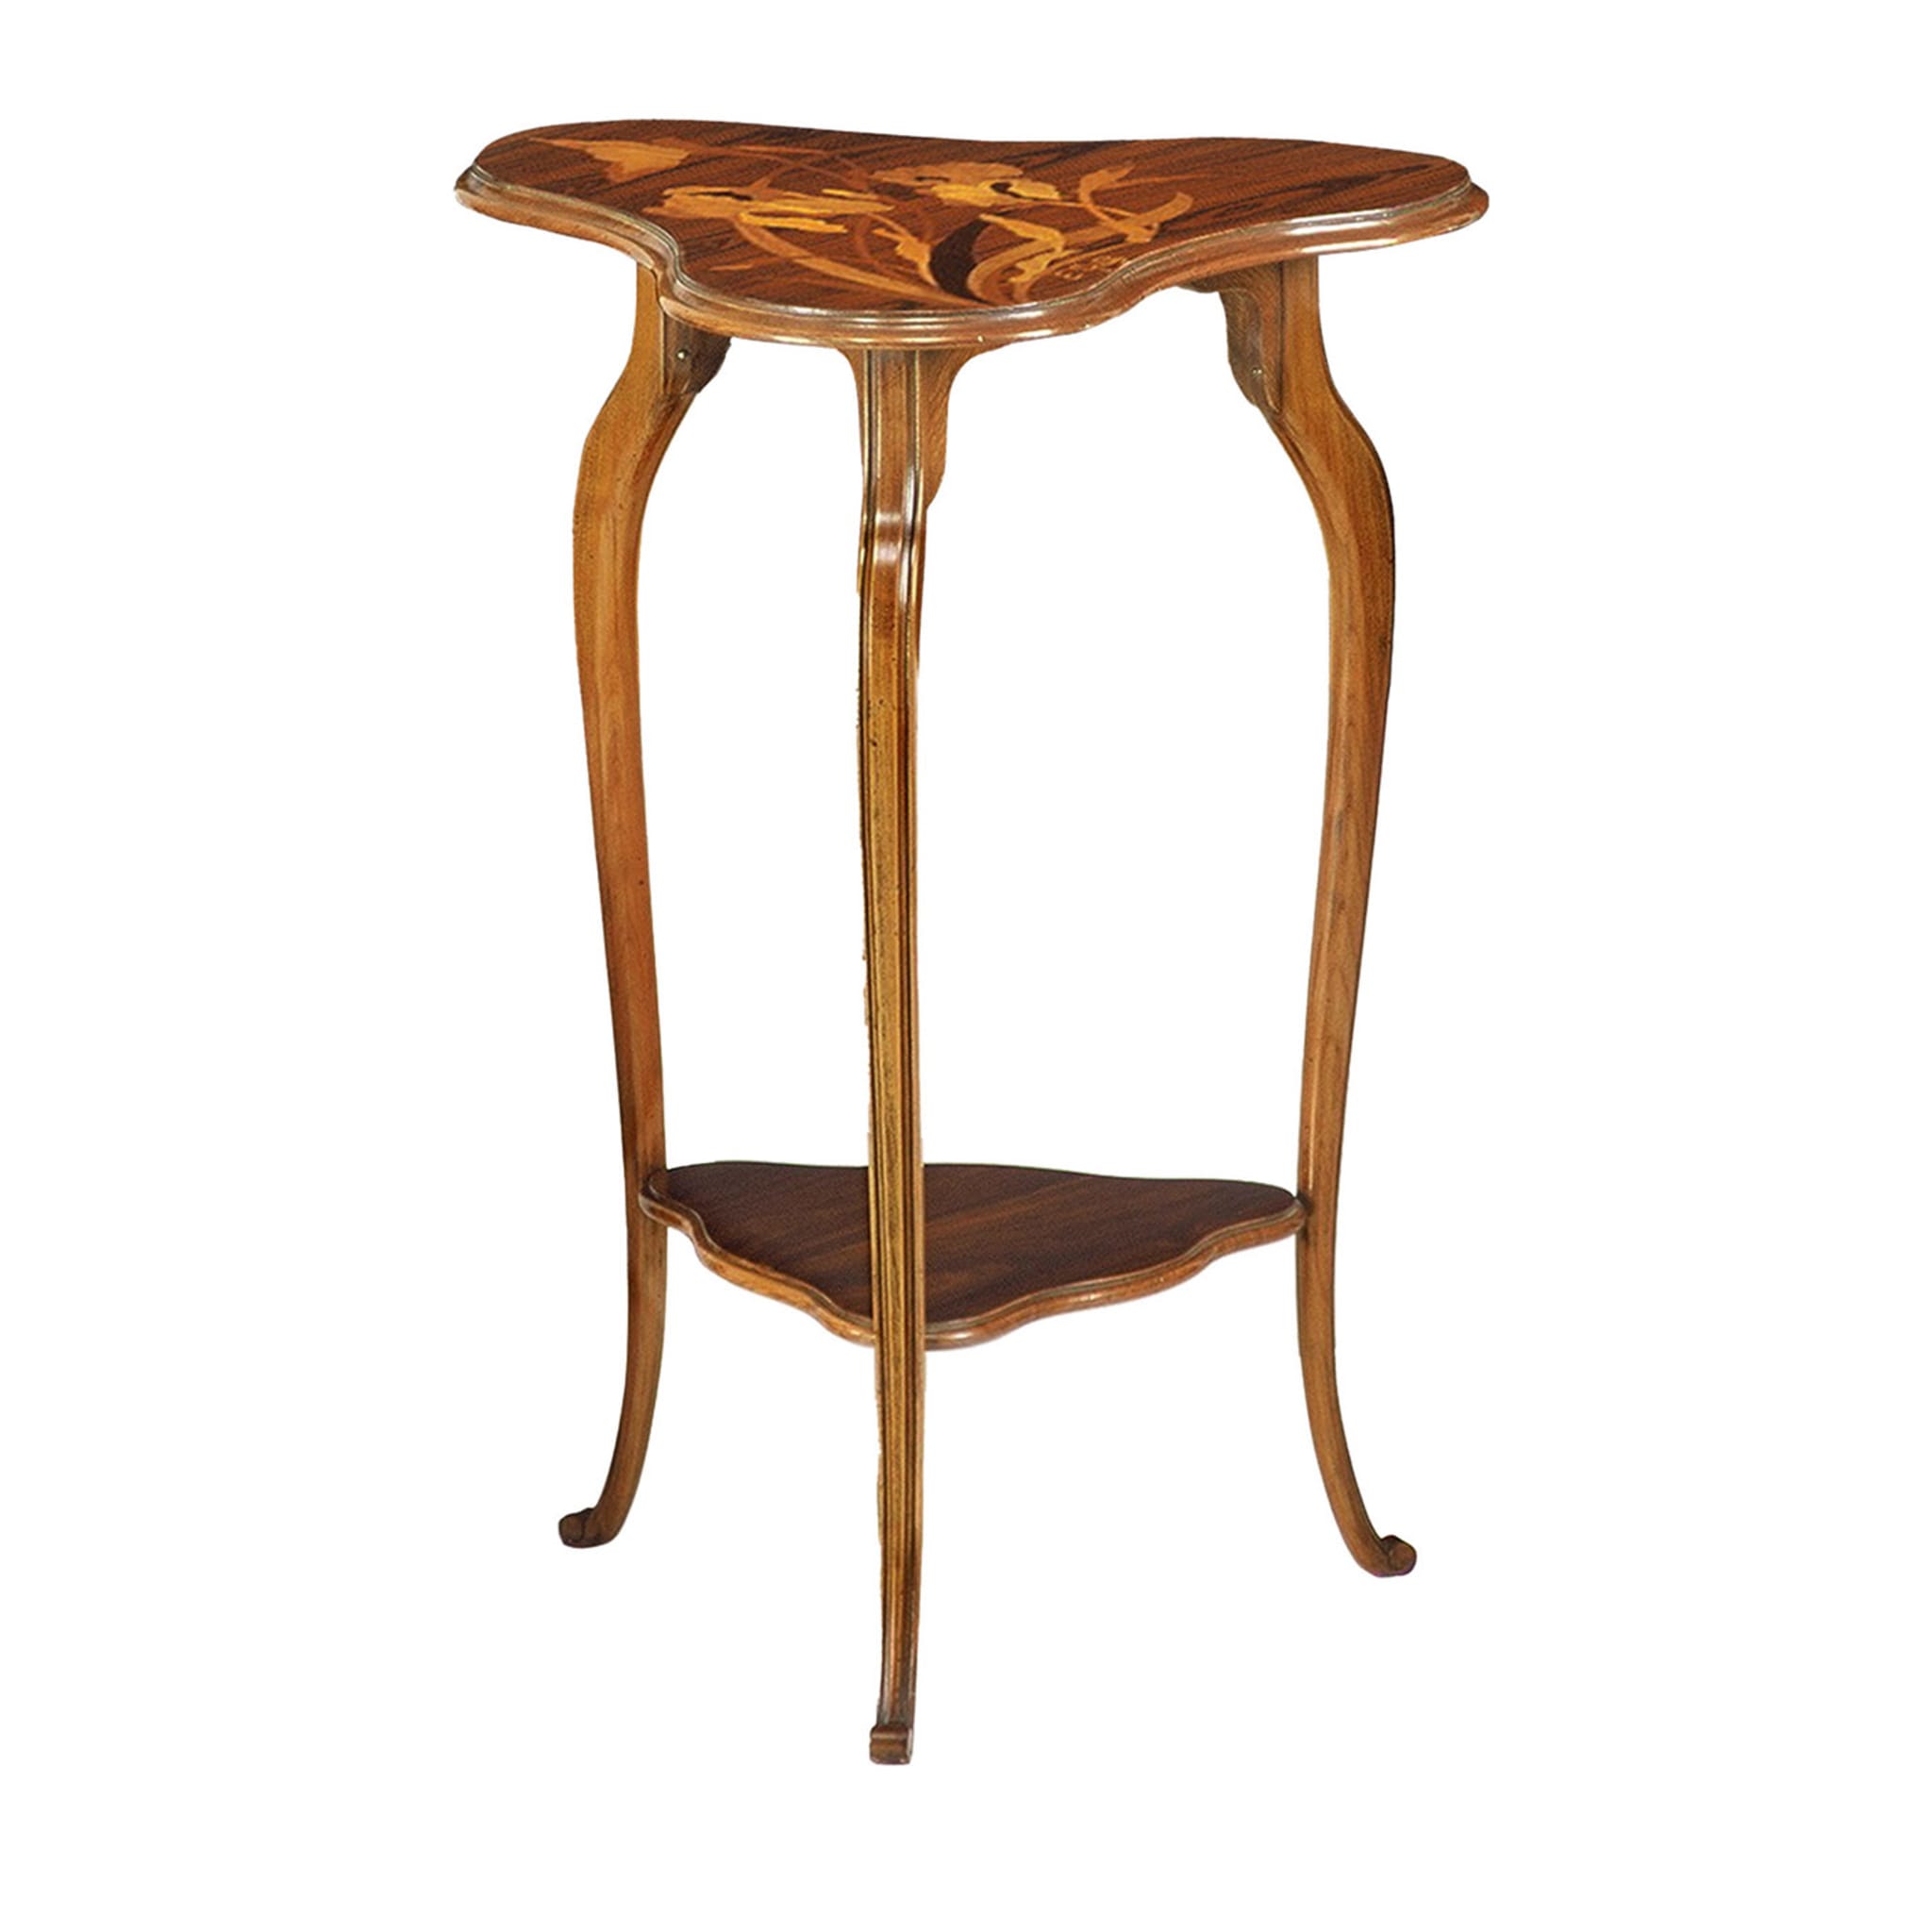 French Art Nouveau-Style Inlaid Triform Side Table by Emile Gallè - Main view